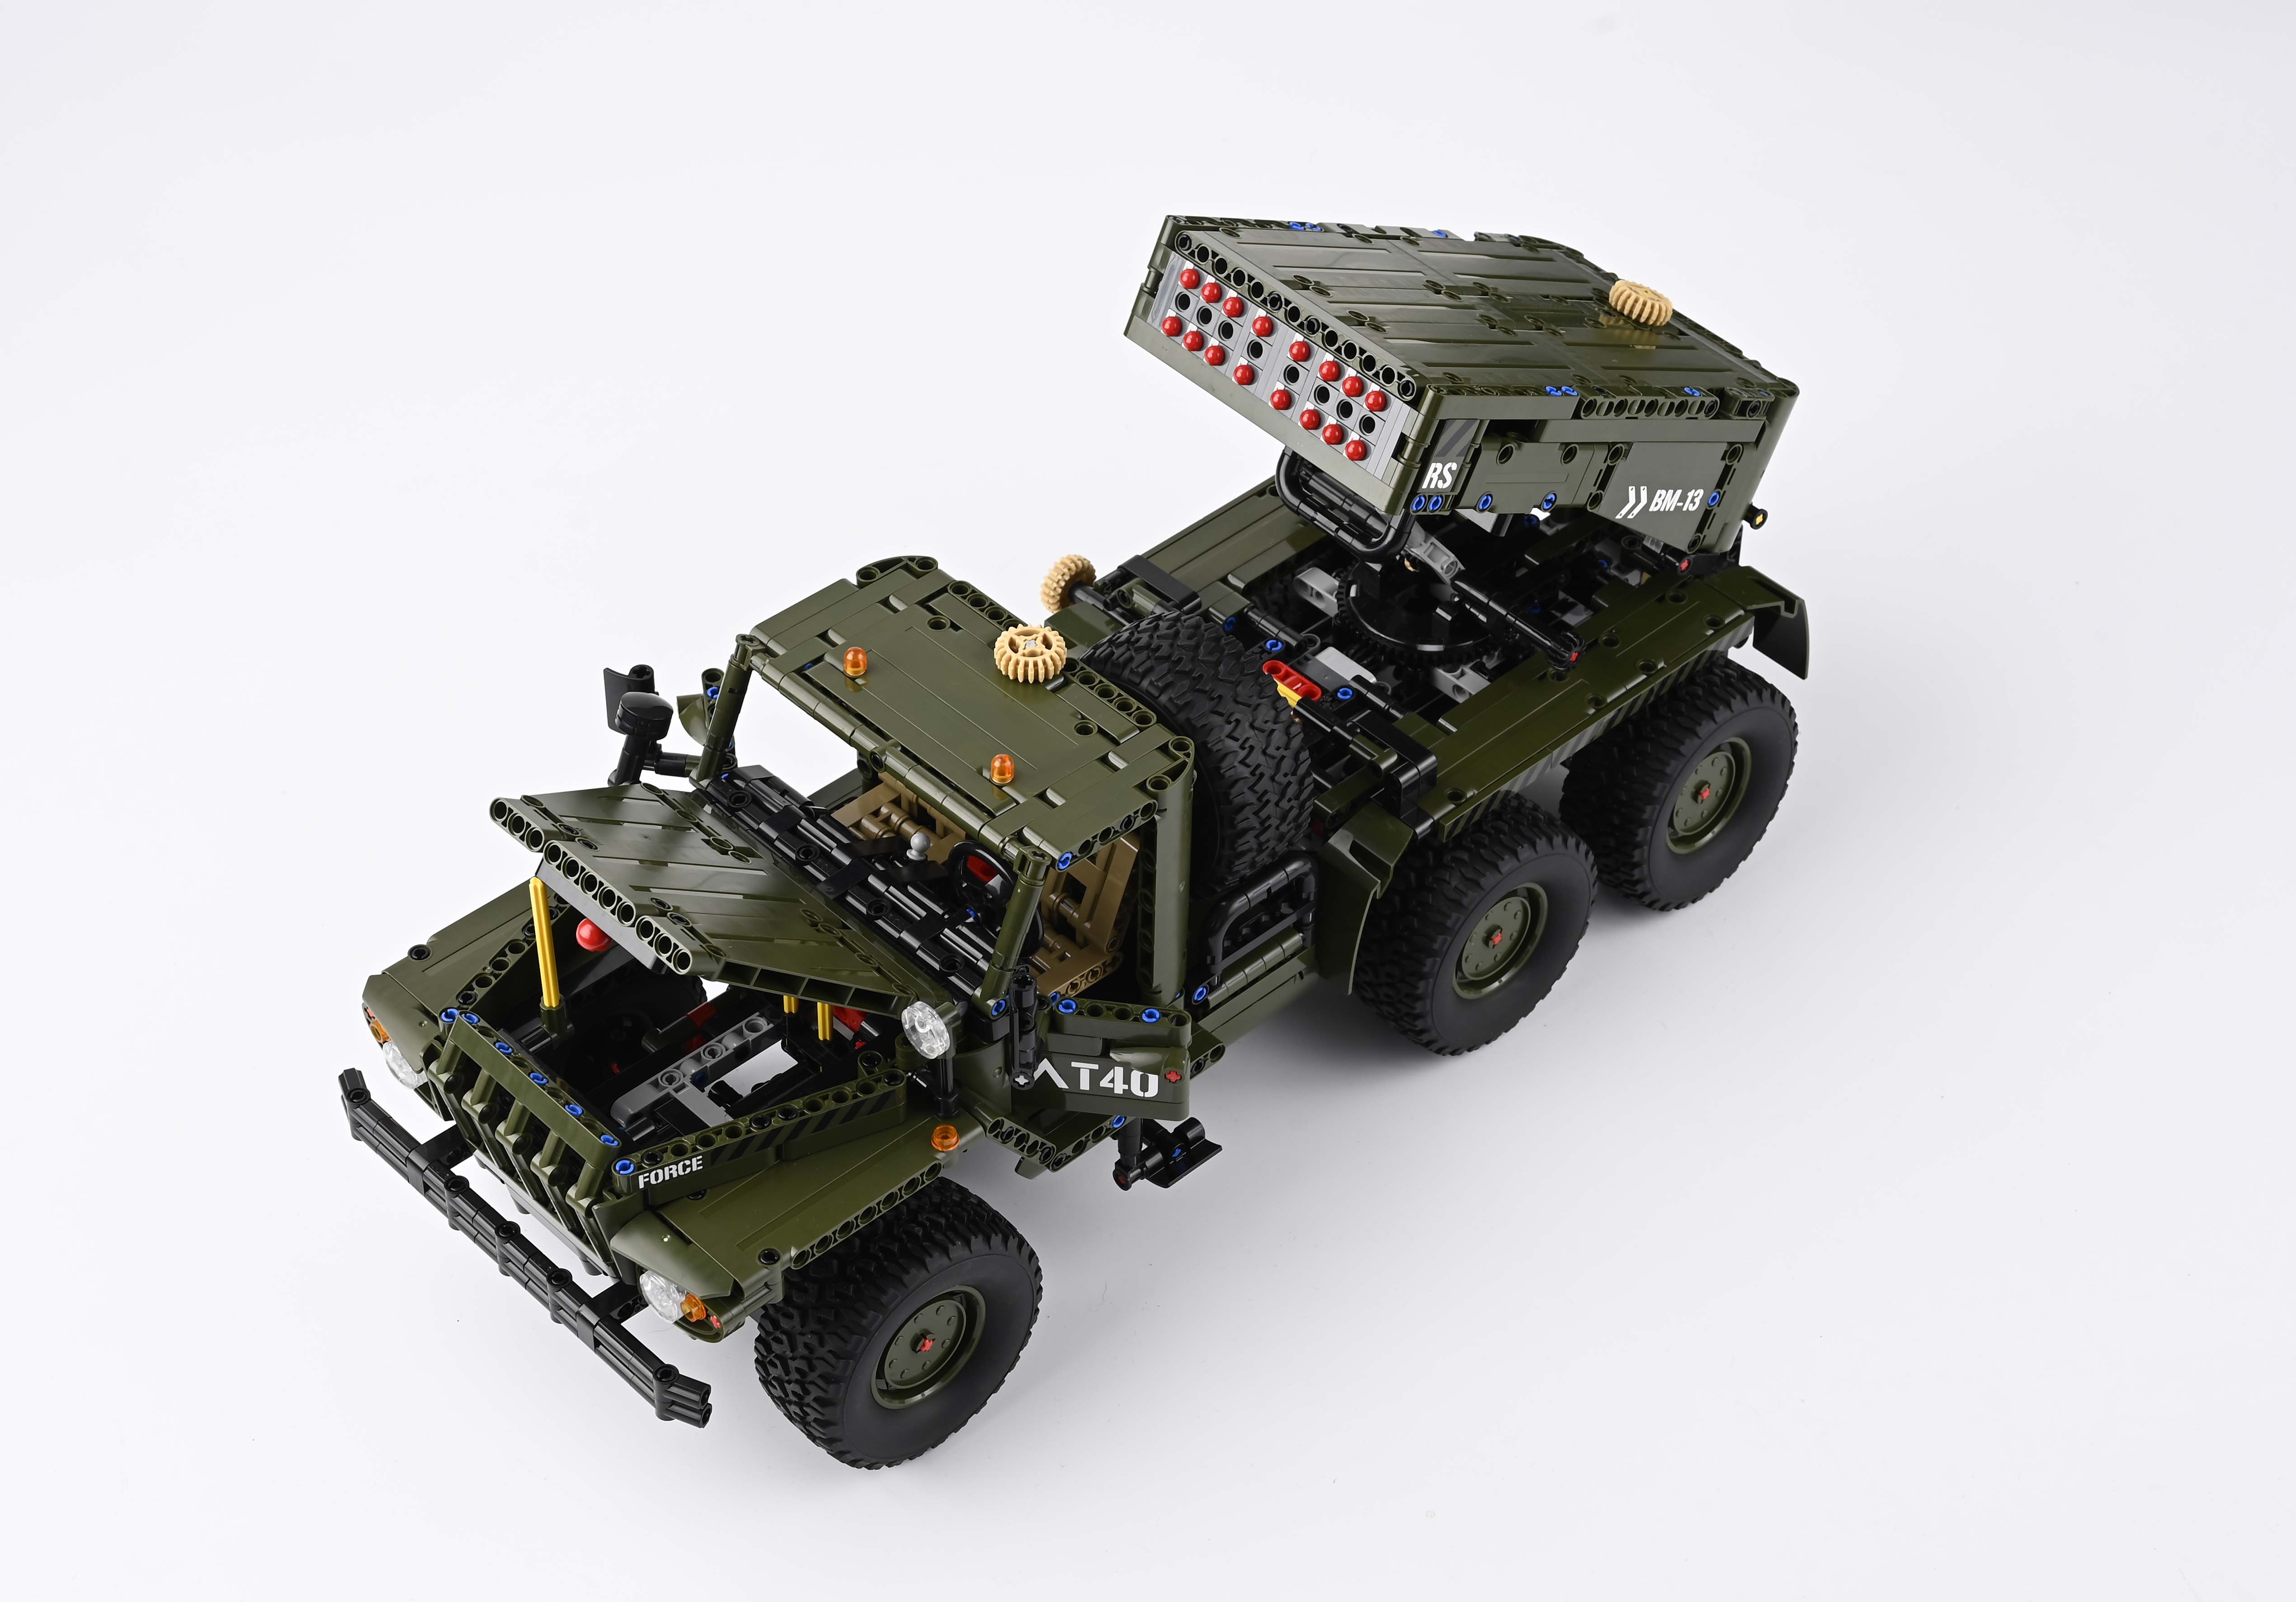 Nifeliz Rocket Artillery Katyusha: An Intricate and Impressive Military Lego  Set for Adults.